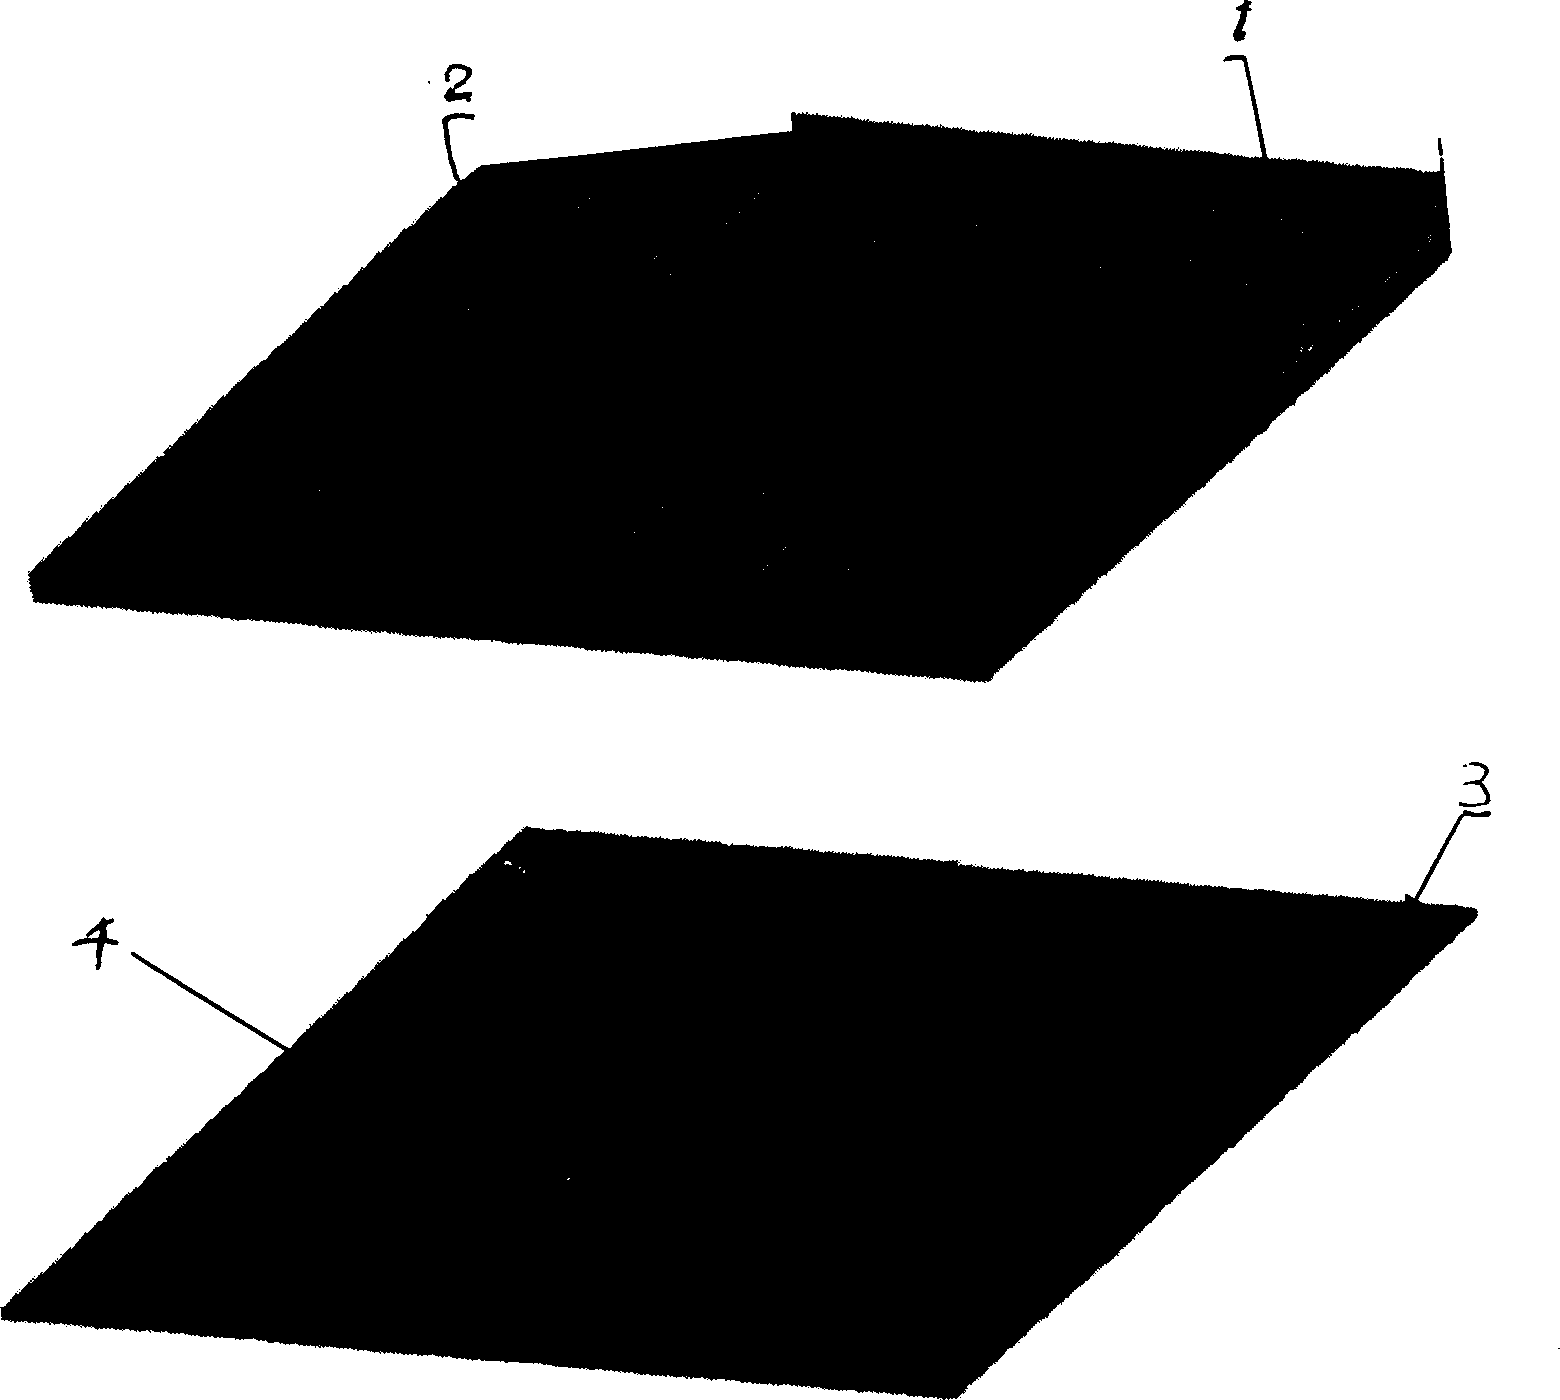 Nickle sheet positioning method